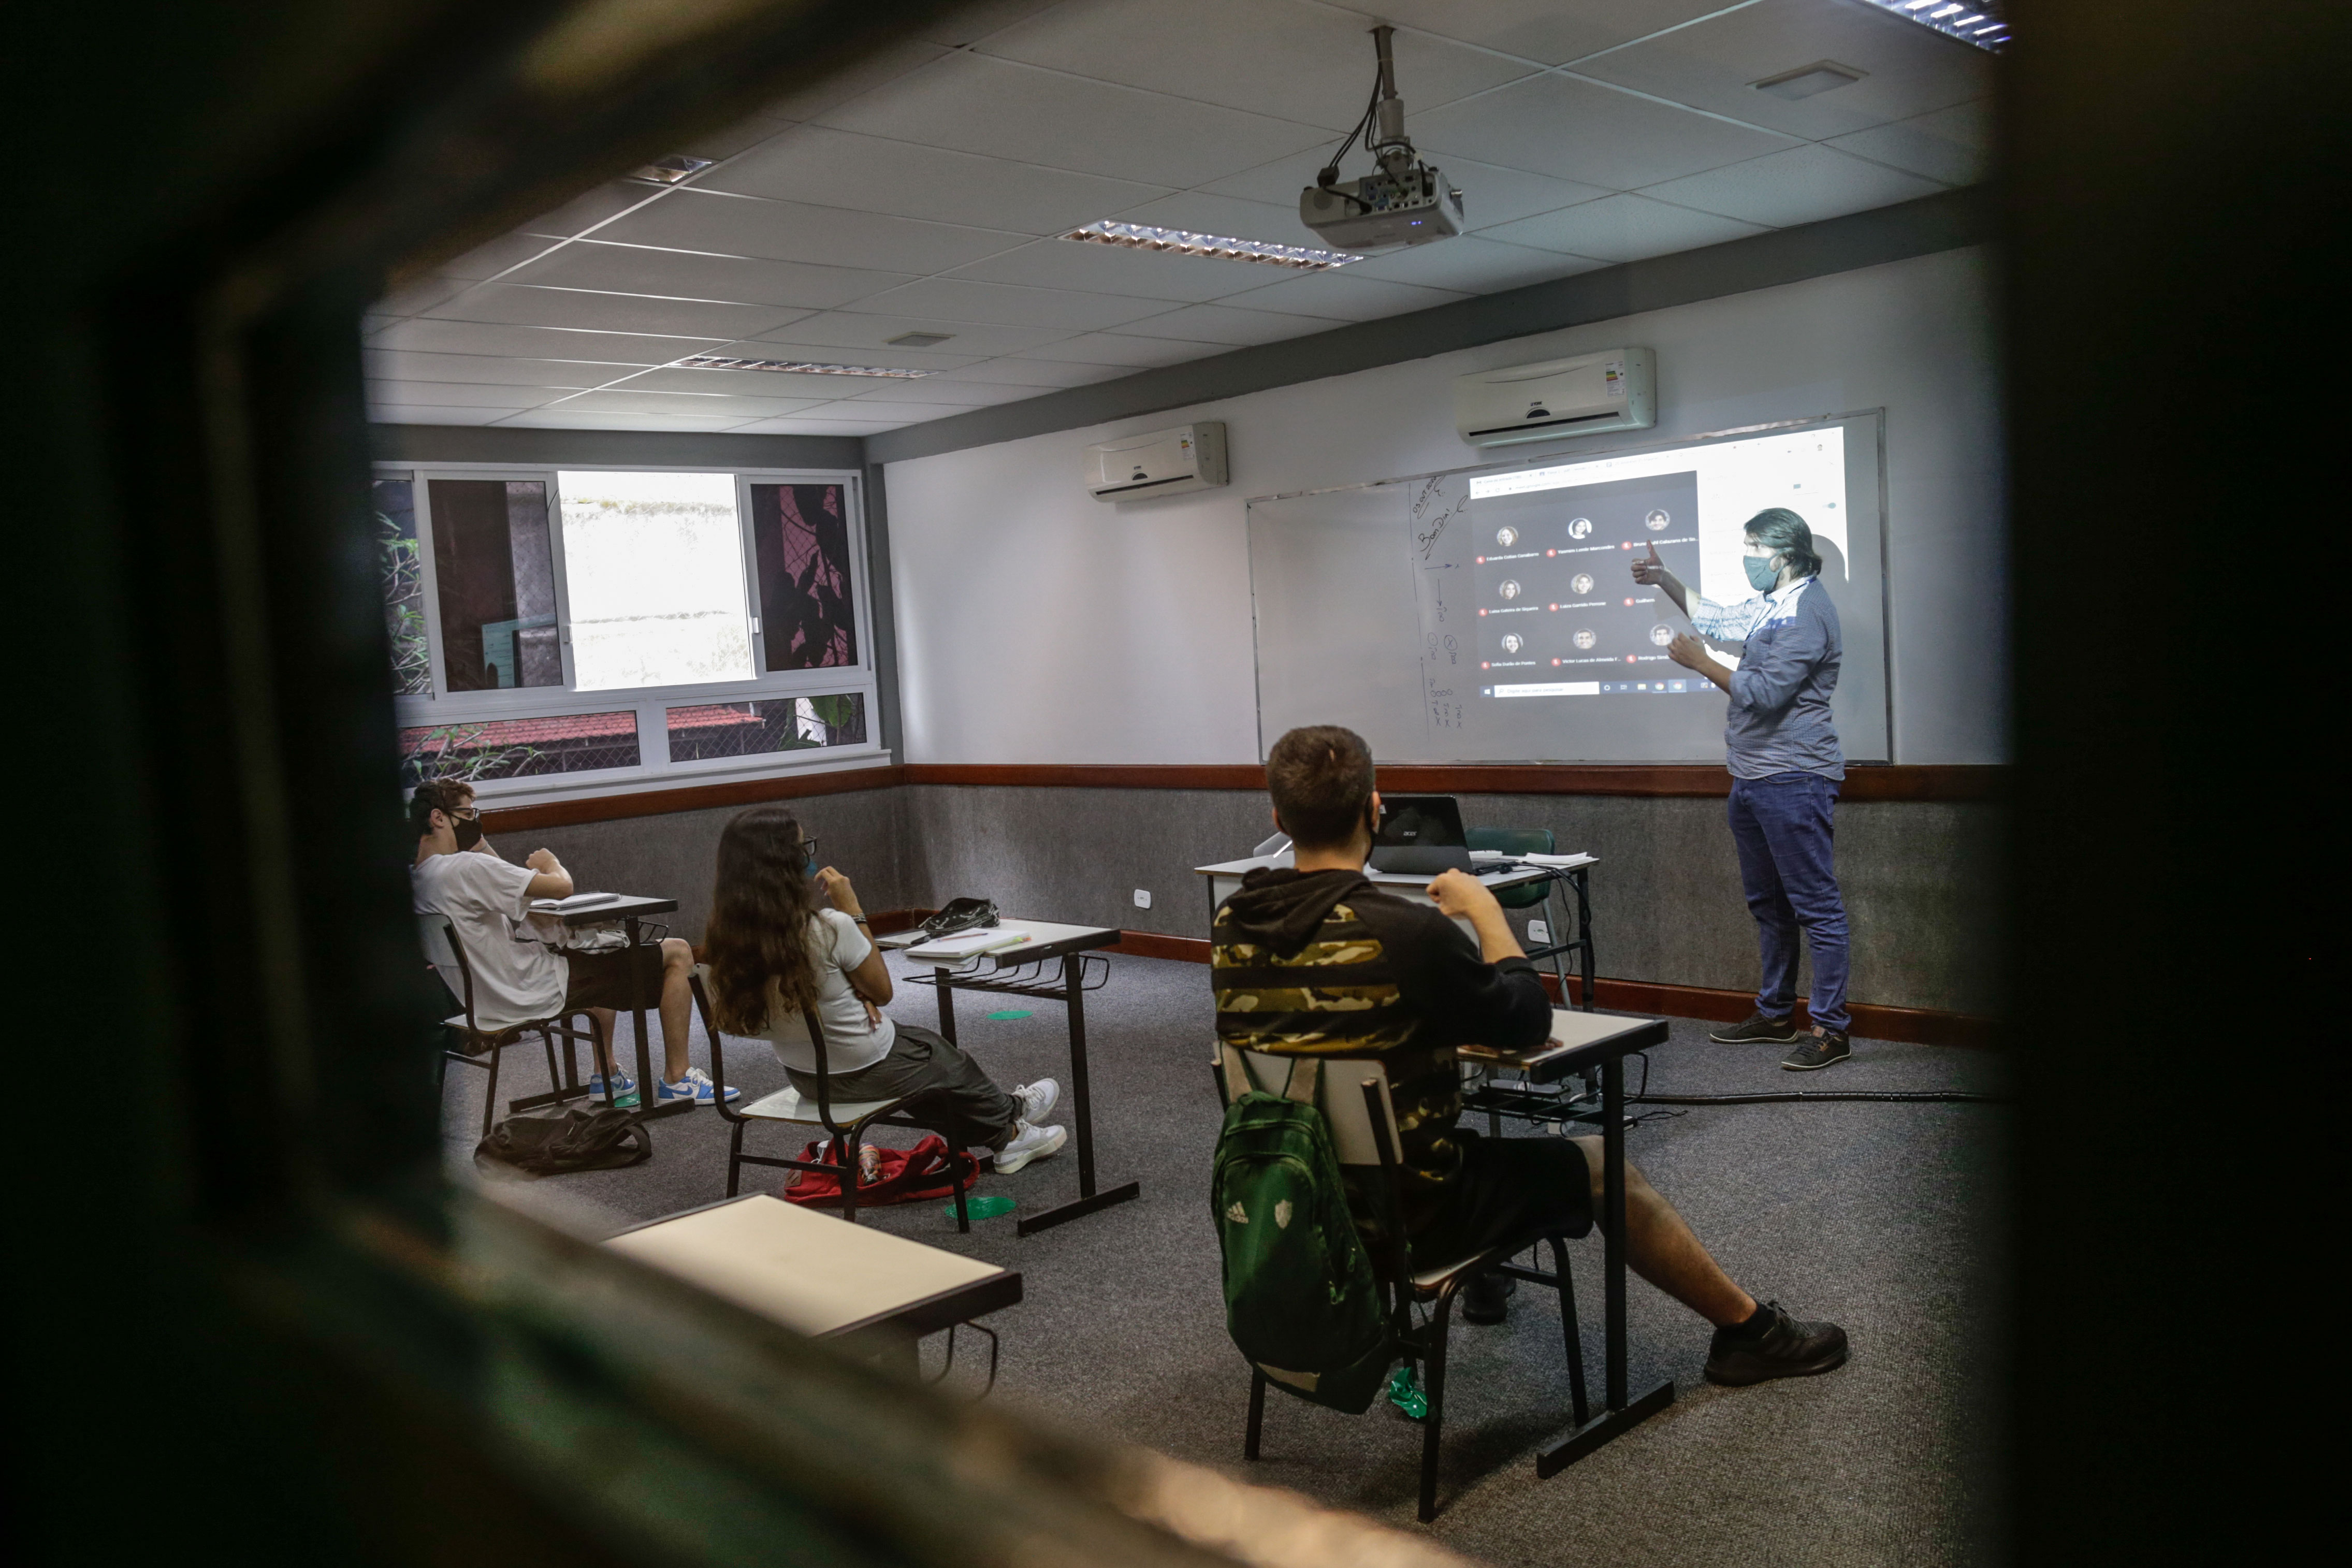 A teacher speaks during a class at a school in Rio de Janeiro in October 2020.